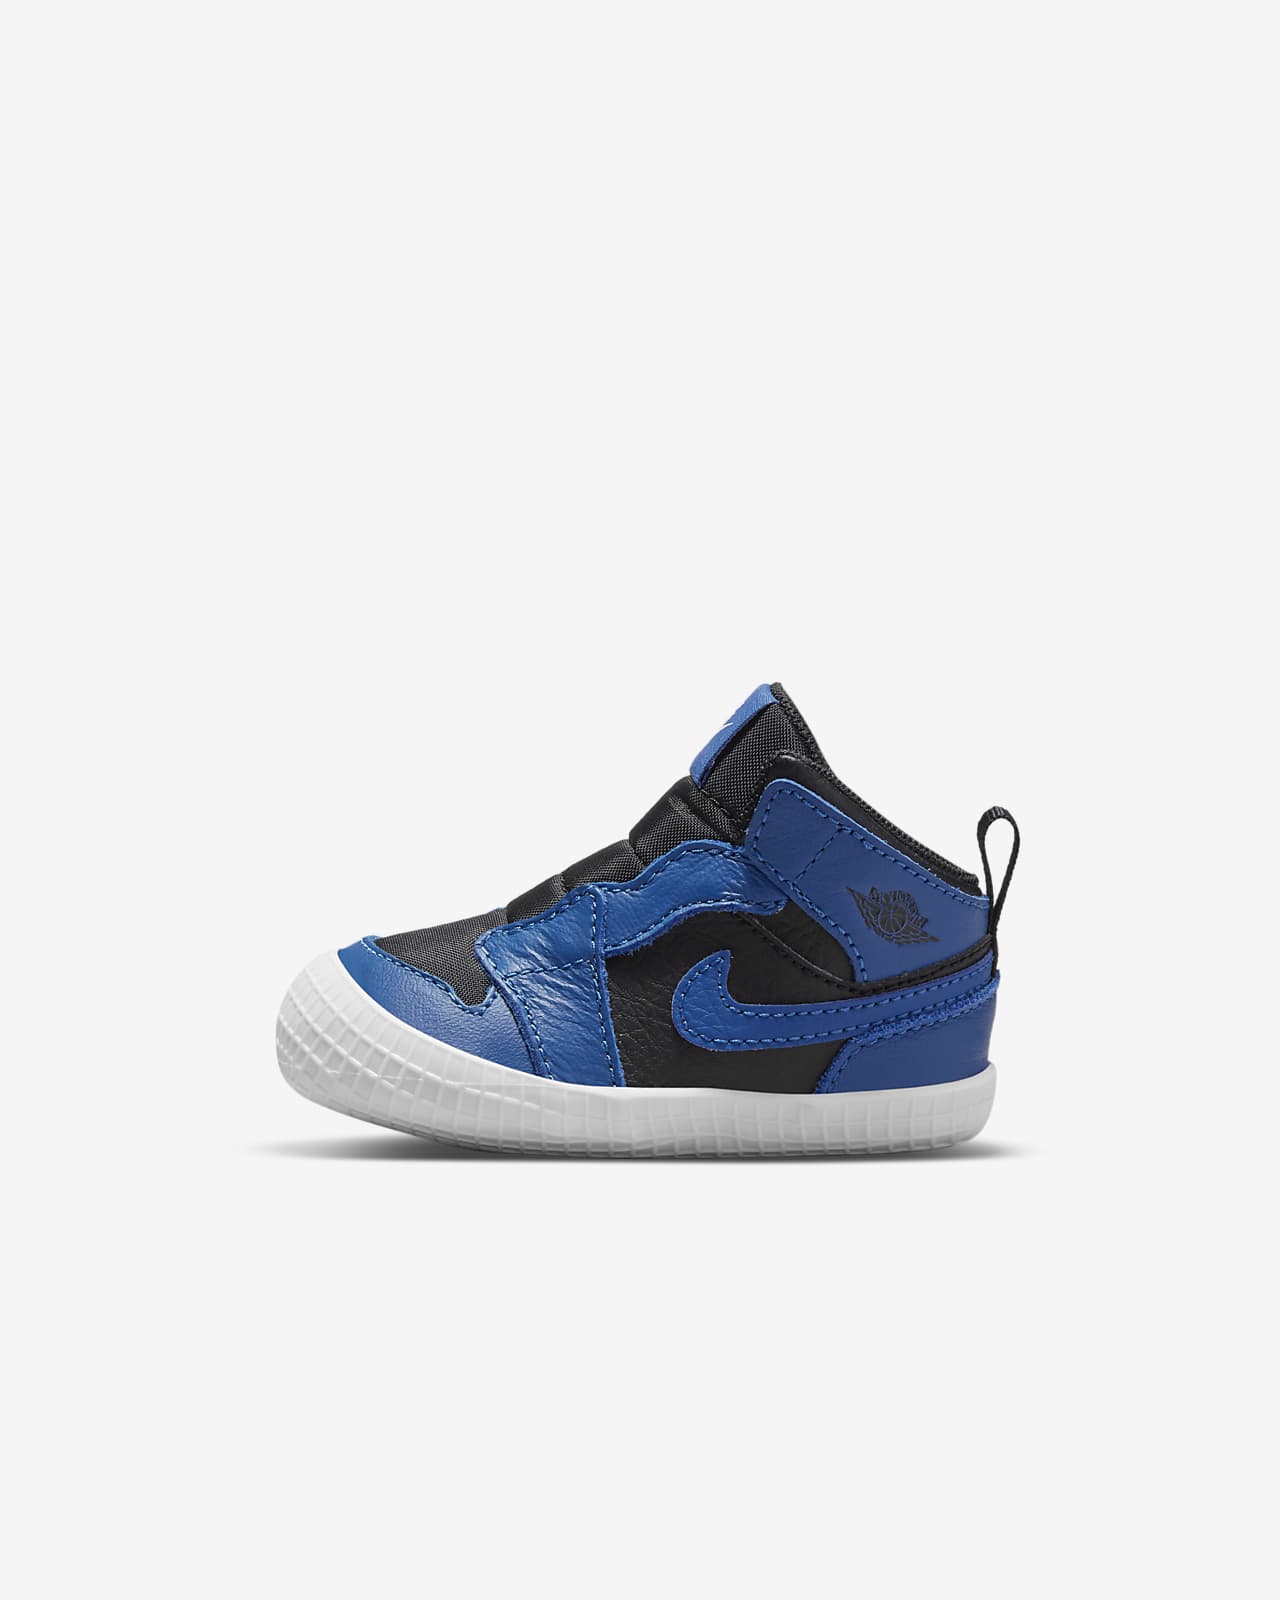 Jordan 1 Botines - Nike ES